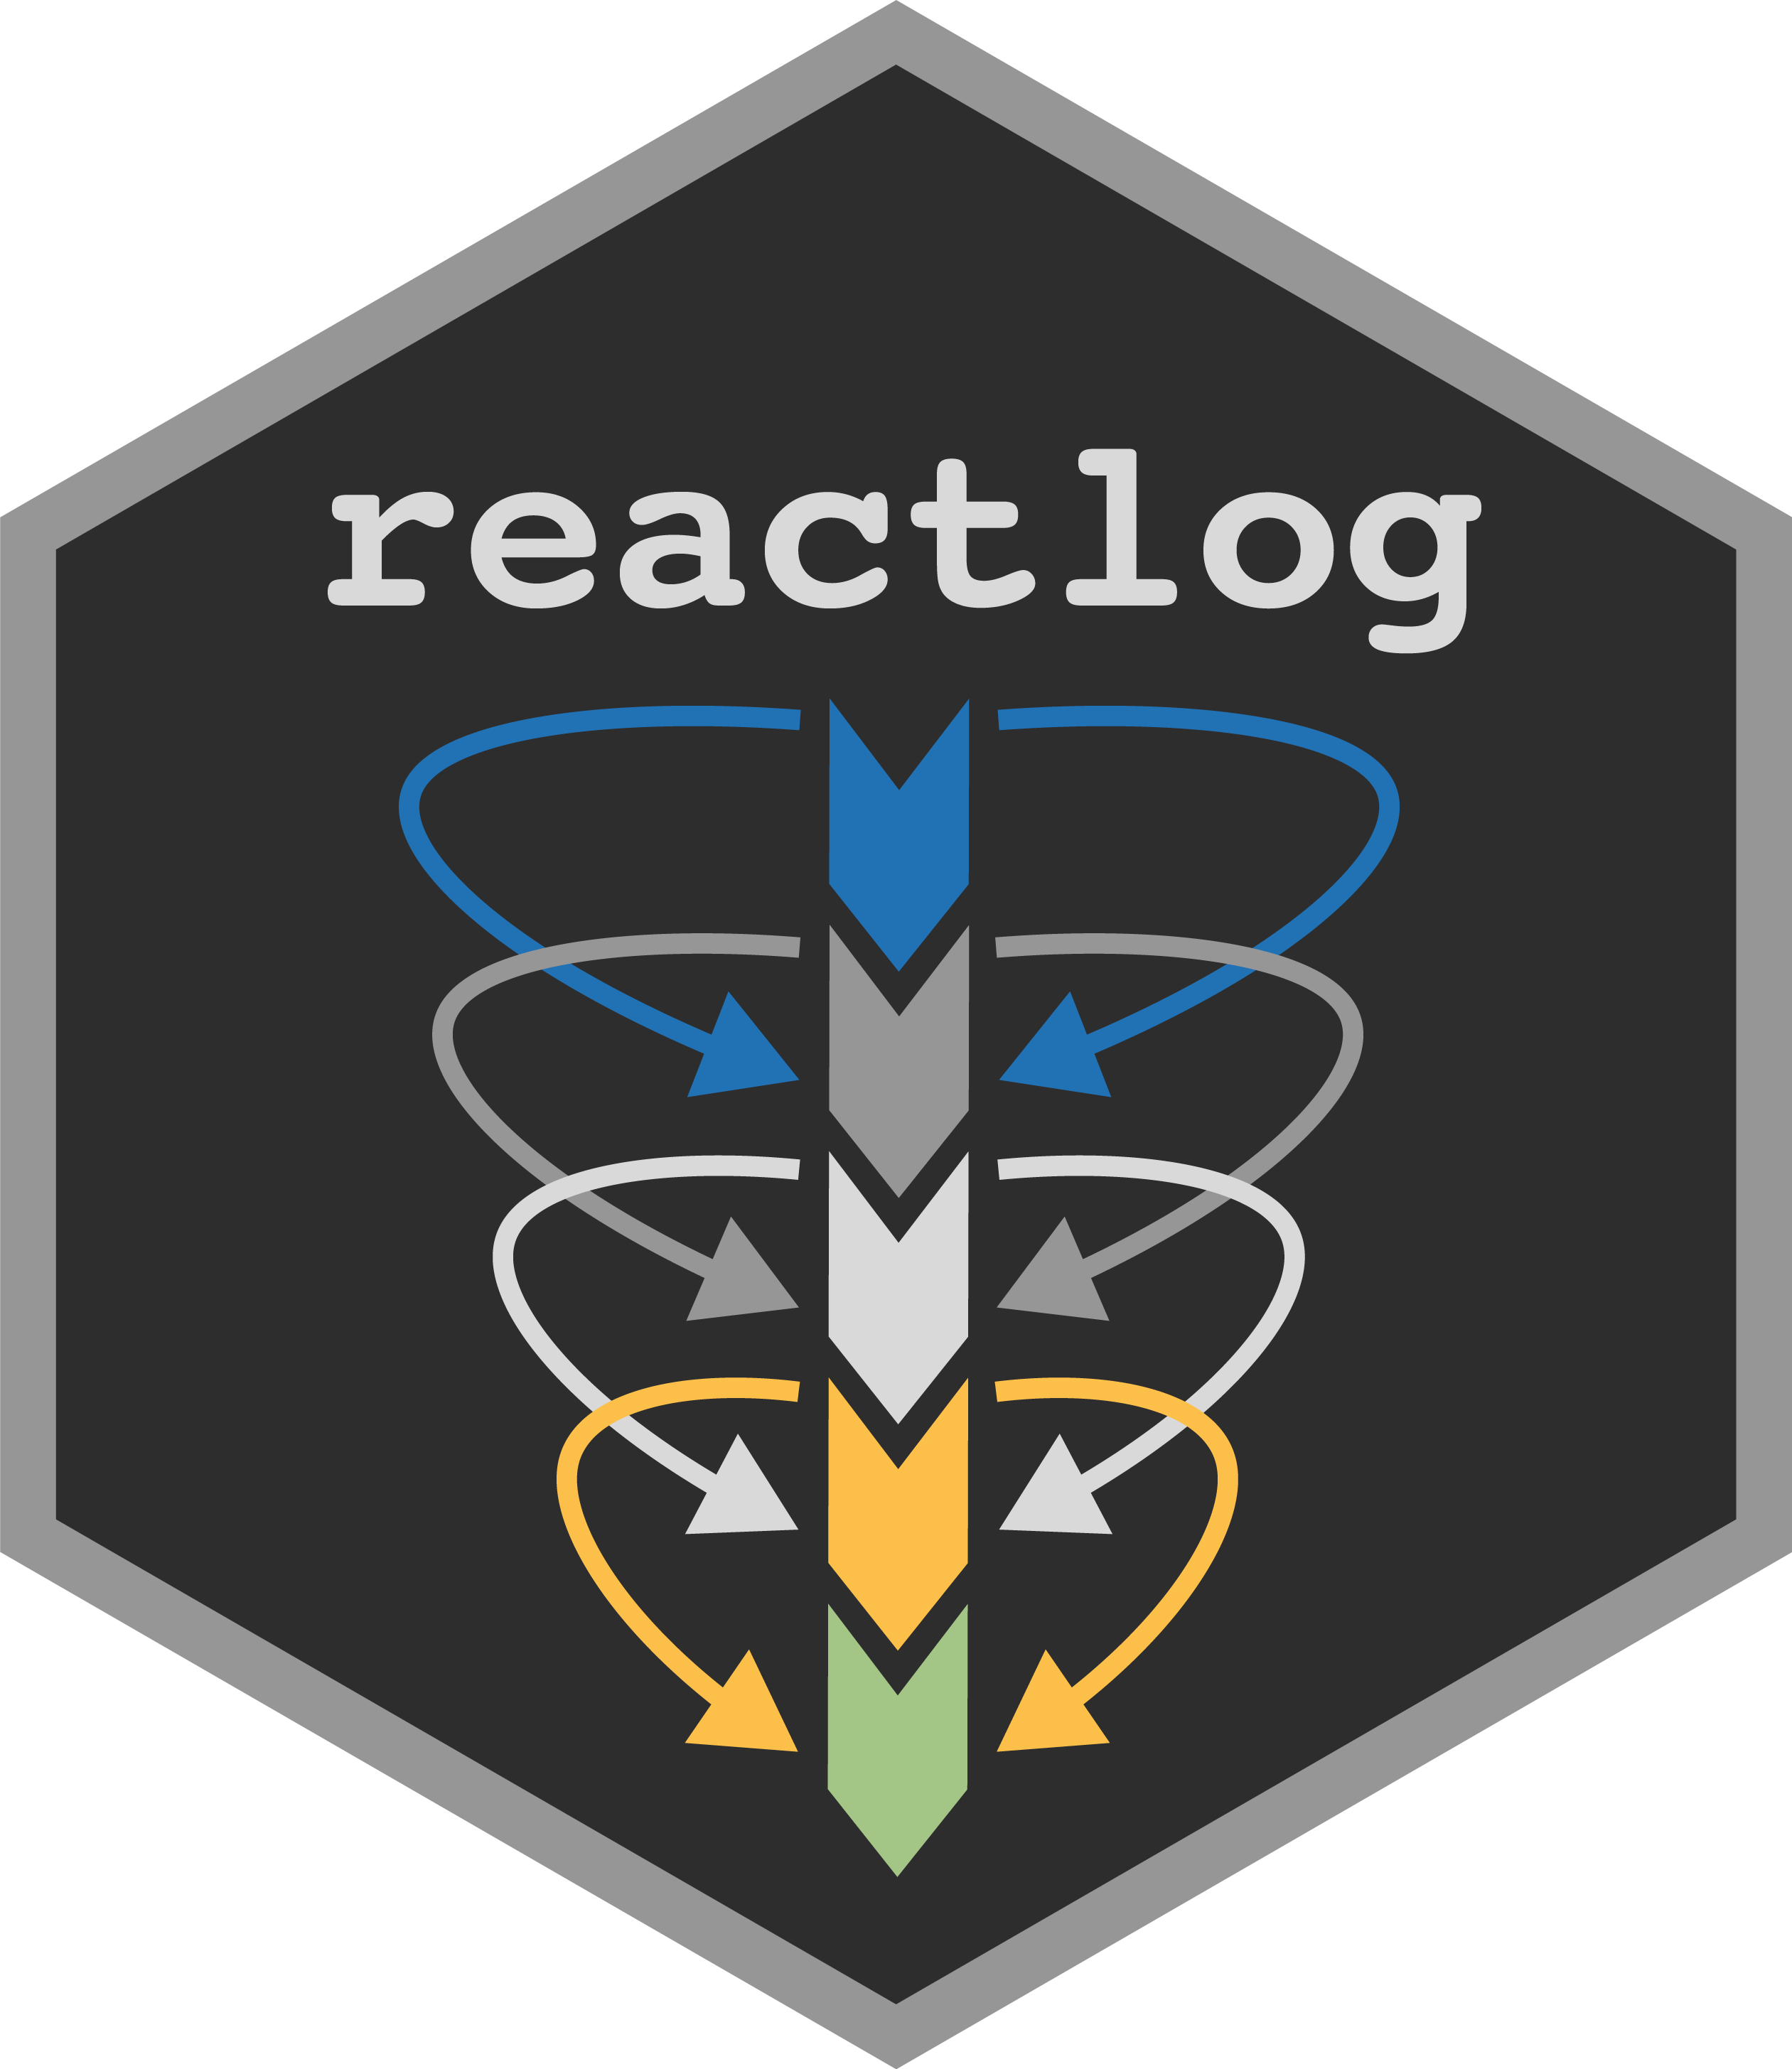 The reactlog hex sticker design.